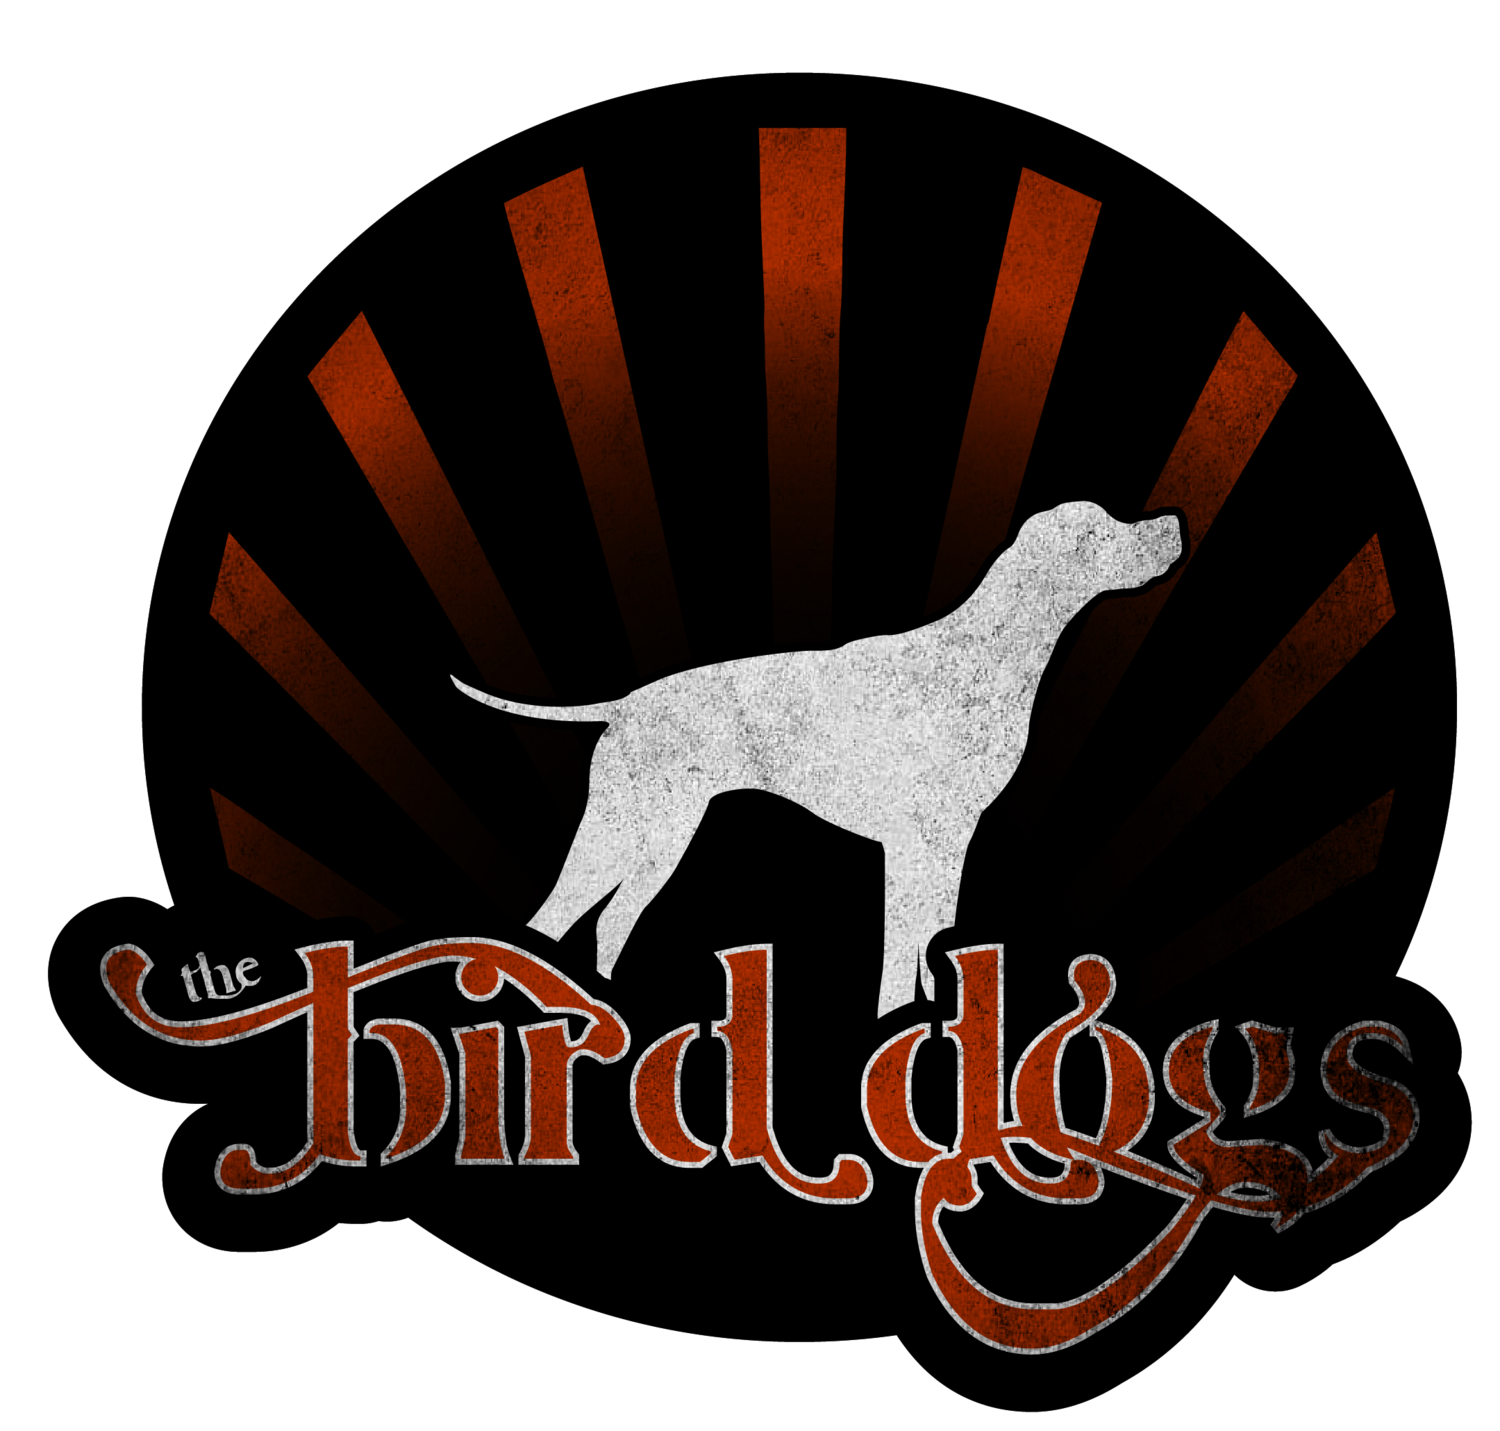 George Dunham & The Bird Dogs